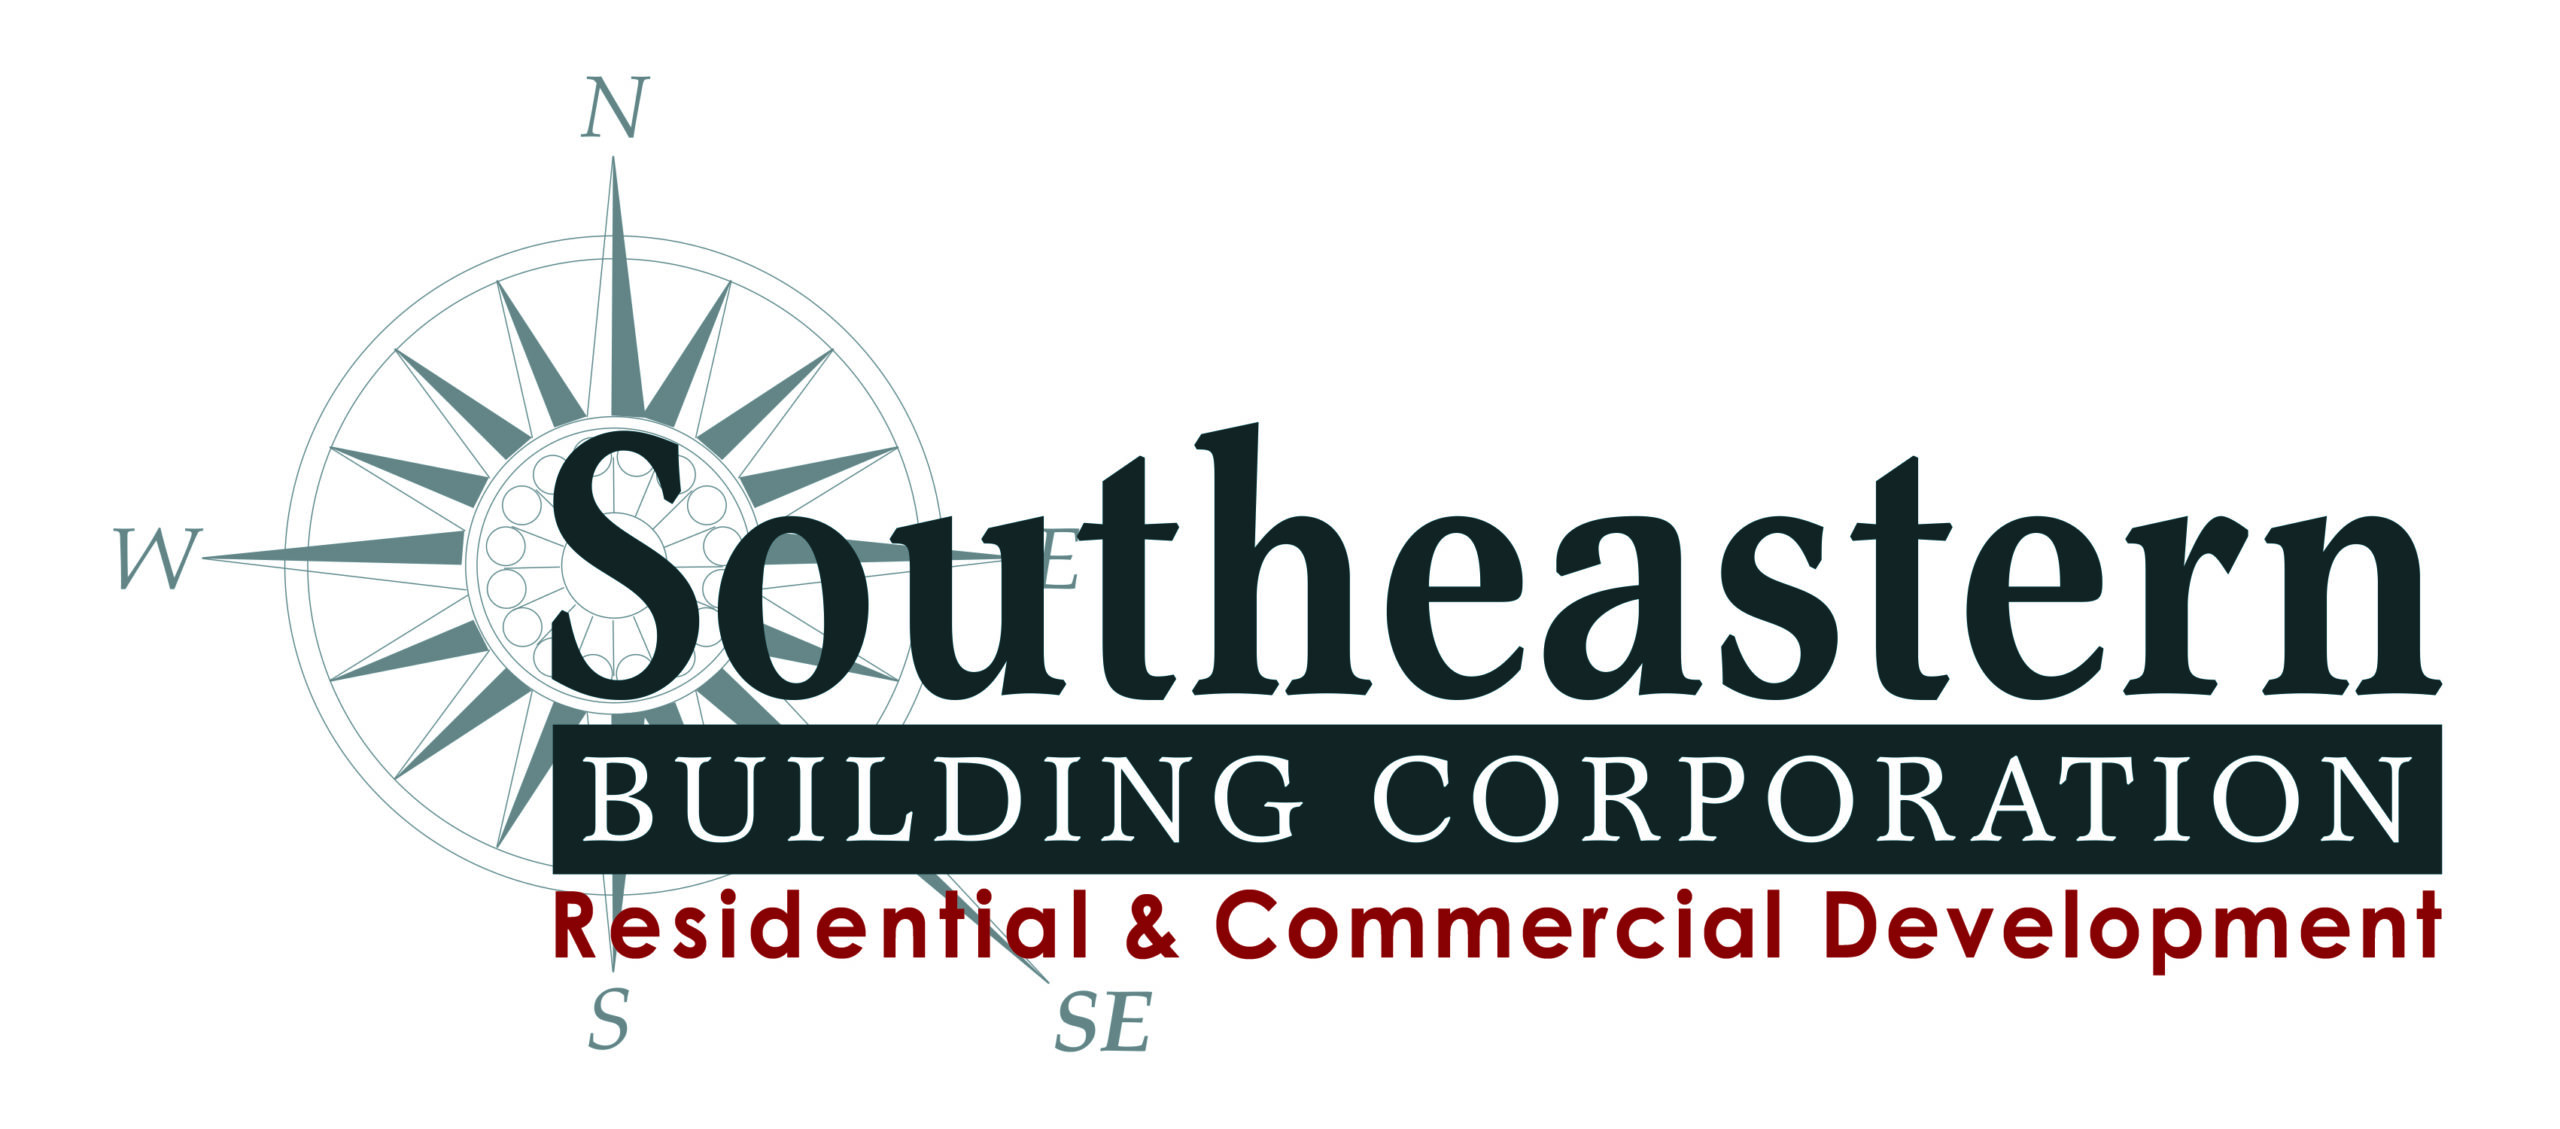 Southeastern Building Corporation logo